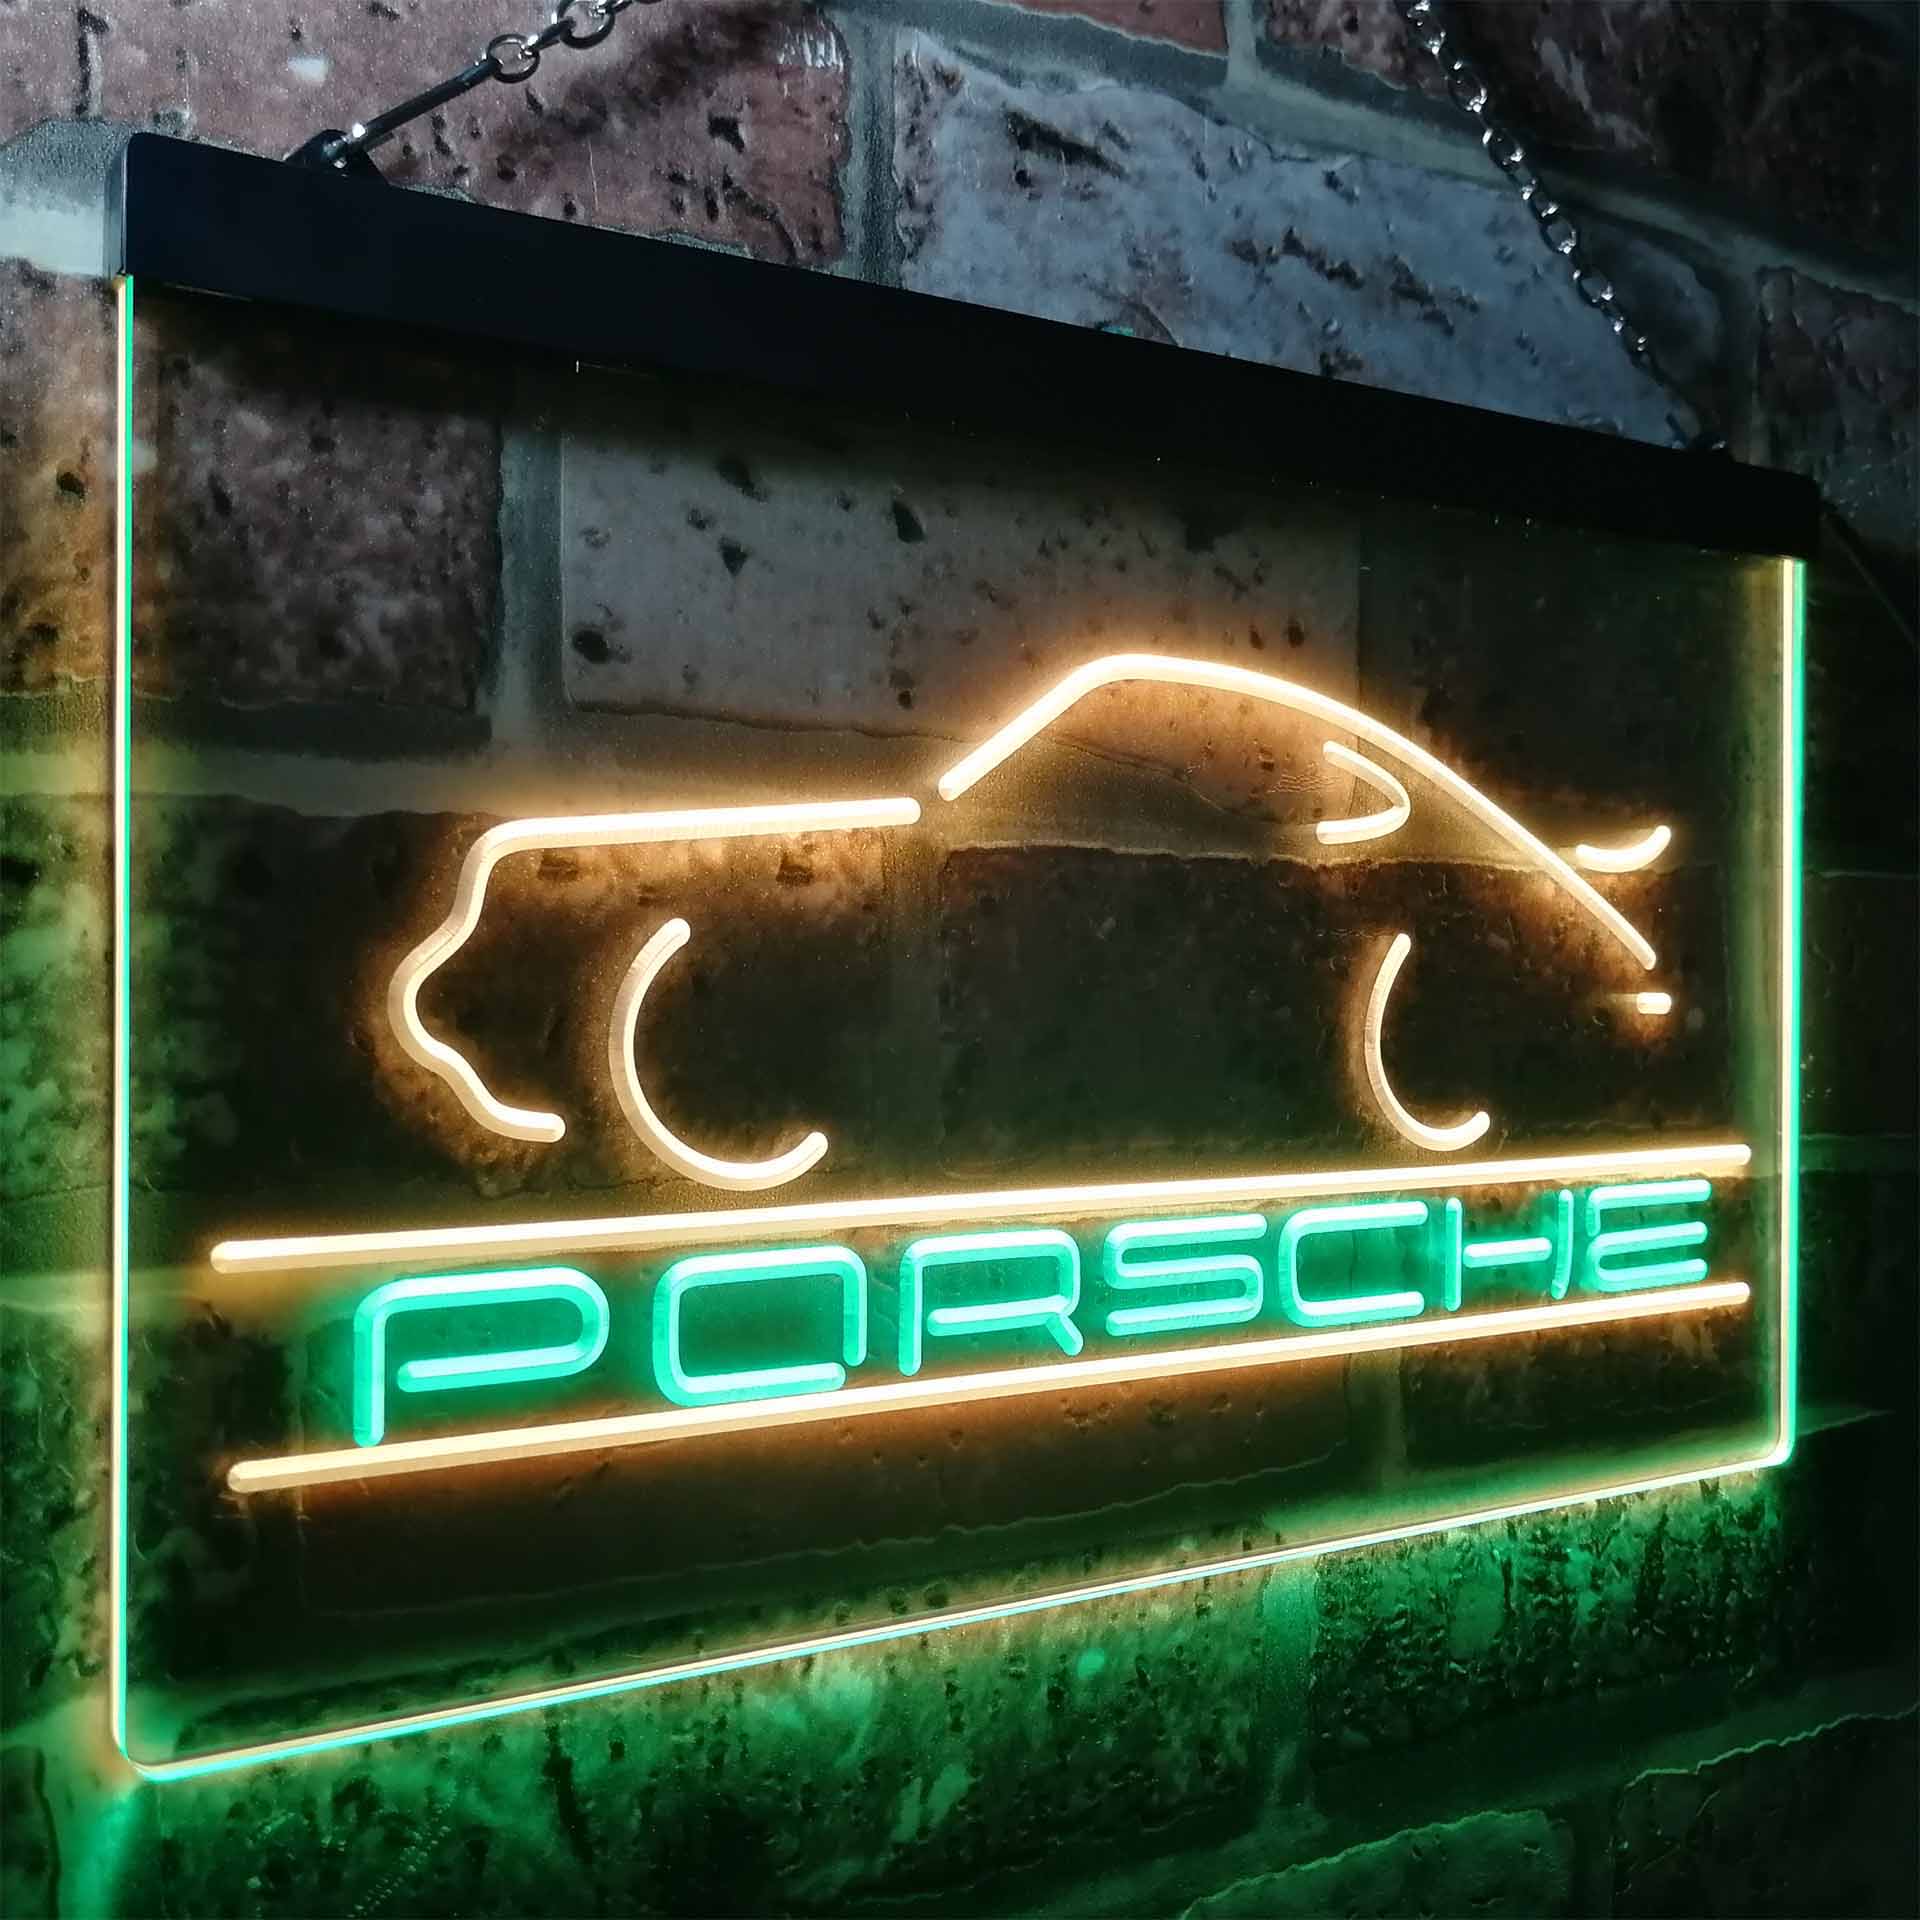 Porsche Garage Man Cave LED Neon Sign